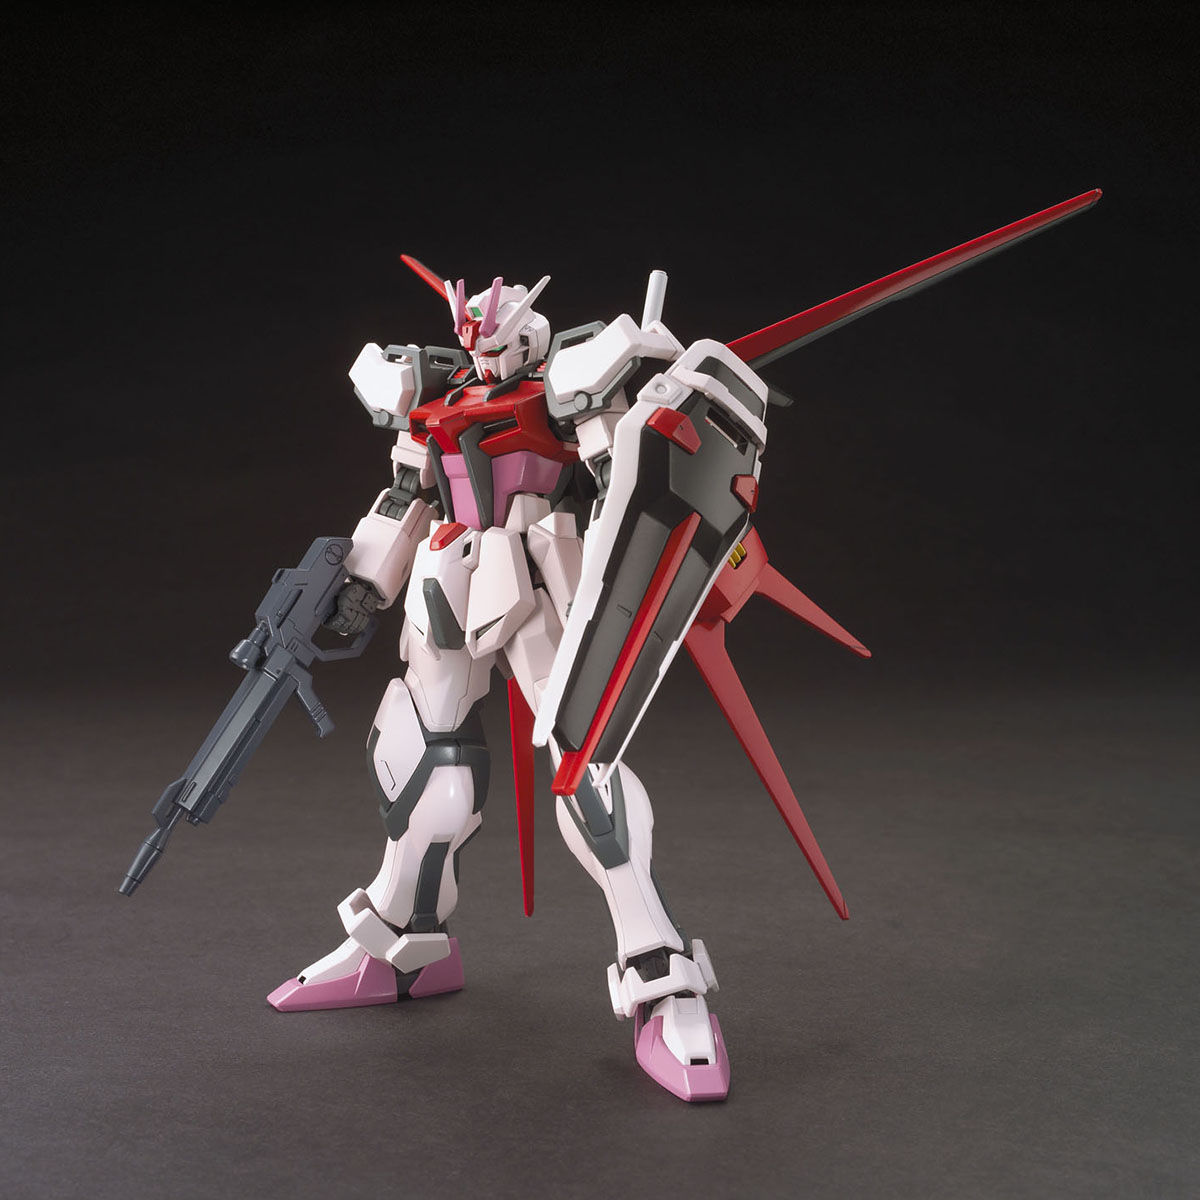 HGCE 1/144 No.176 MBF-02+AQM/E-X01 Aile Strike Rouge Gundam